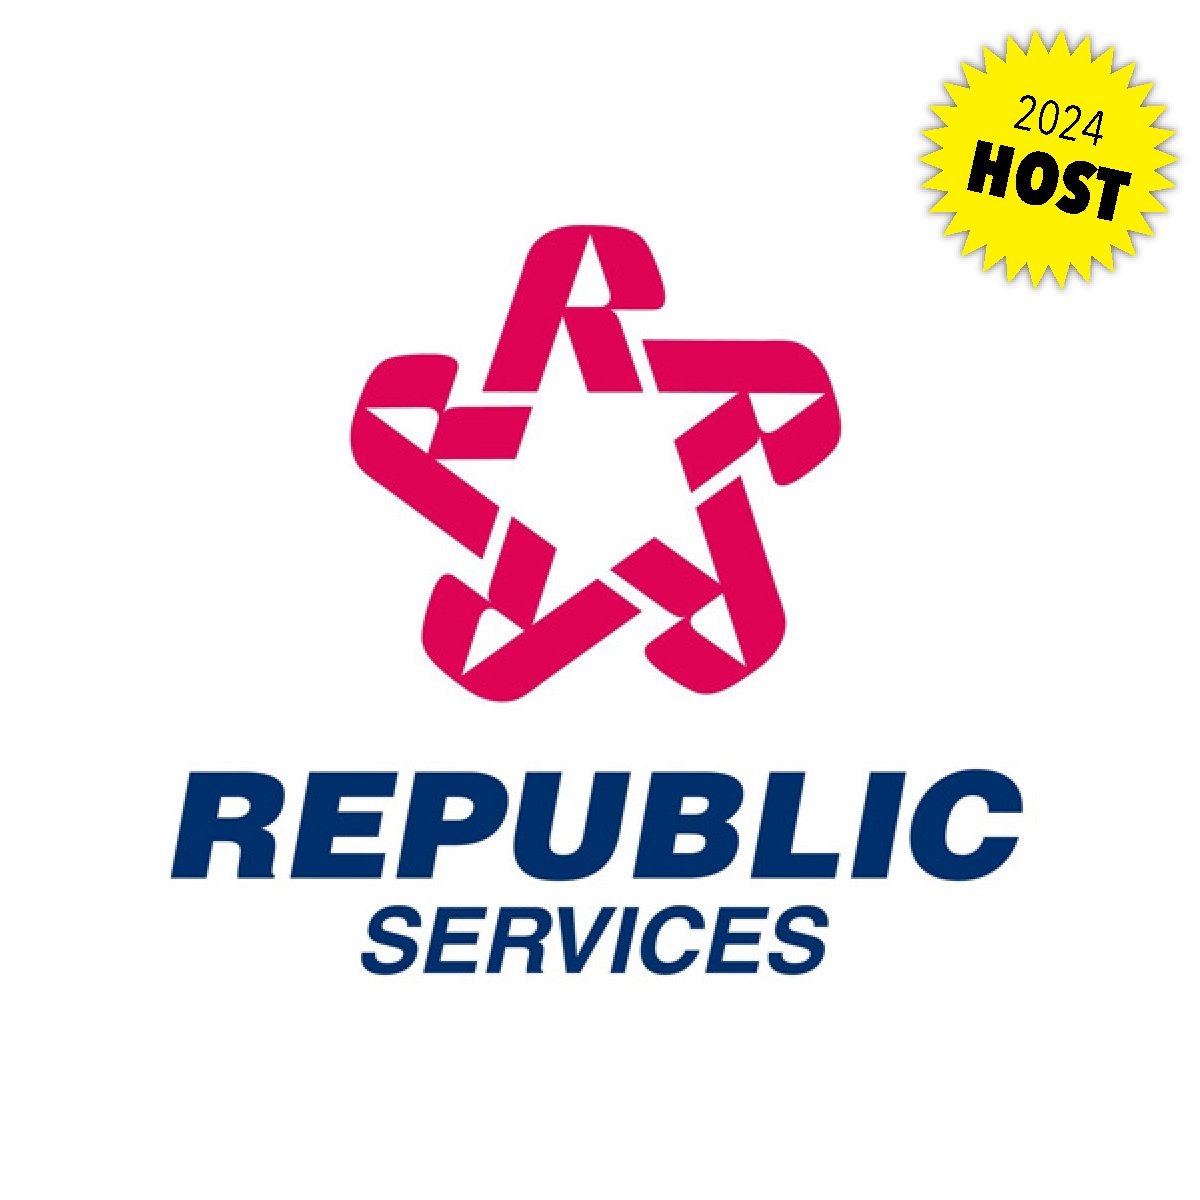 republic-services-host-sponsor.jpg